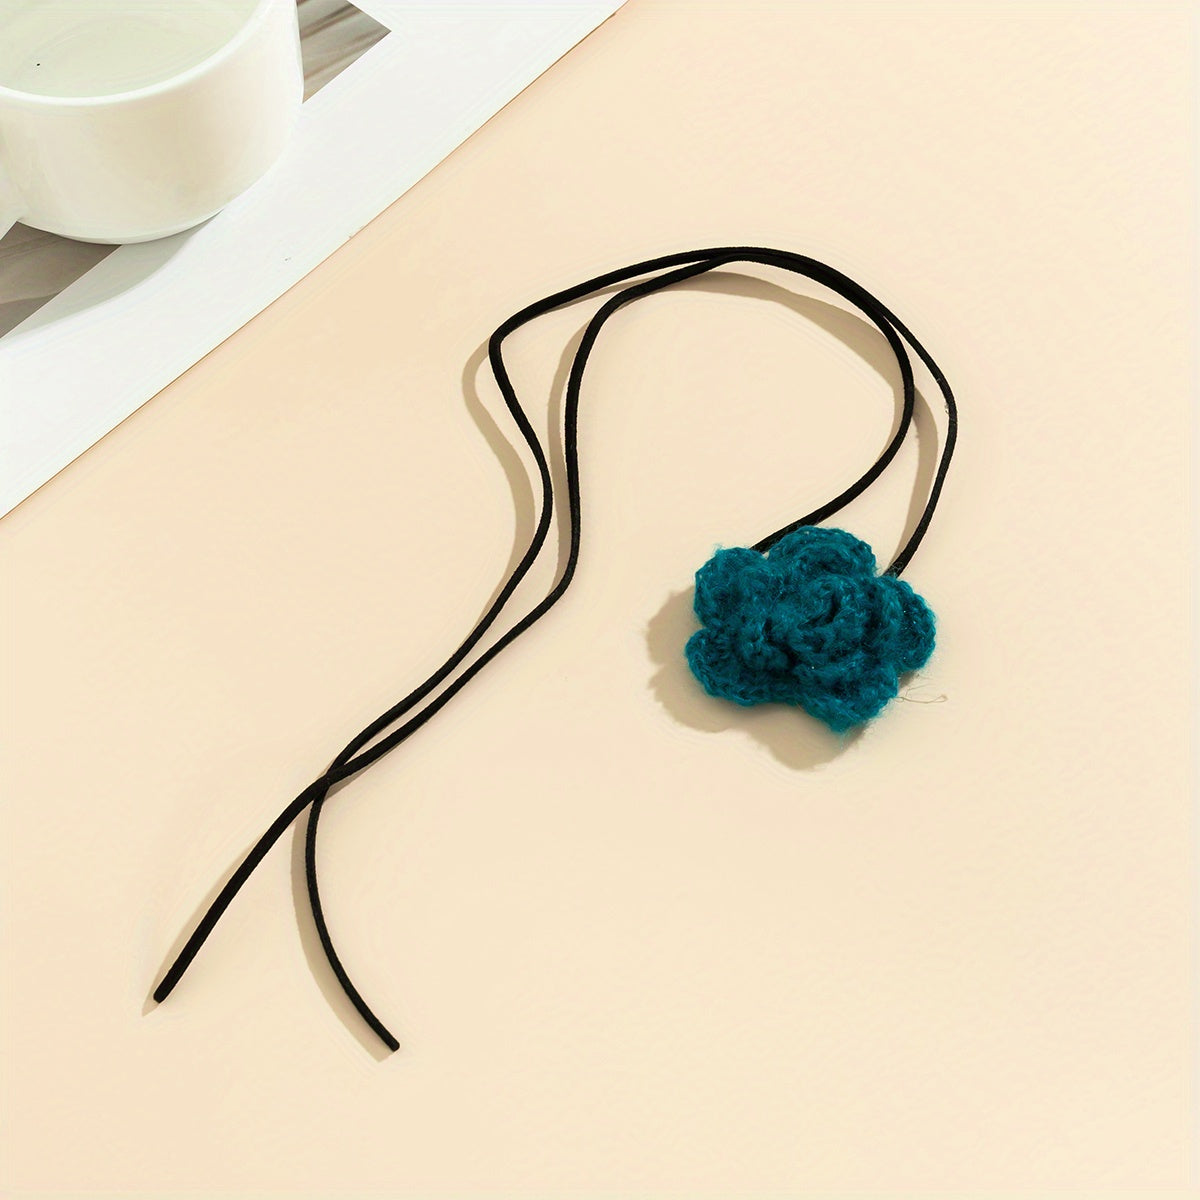 Vintage French Flower Velvet Belt Chocker - Adjustable Size, Perfect for Holiday Parties!